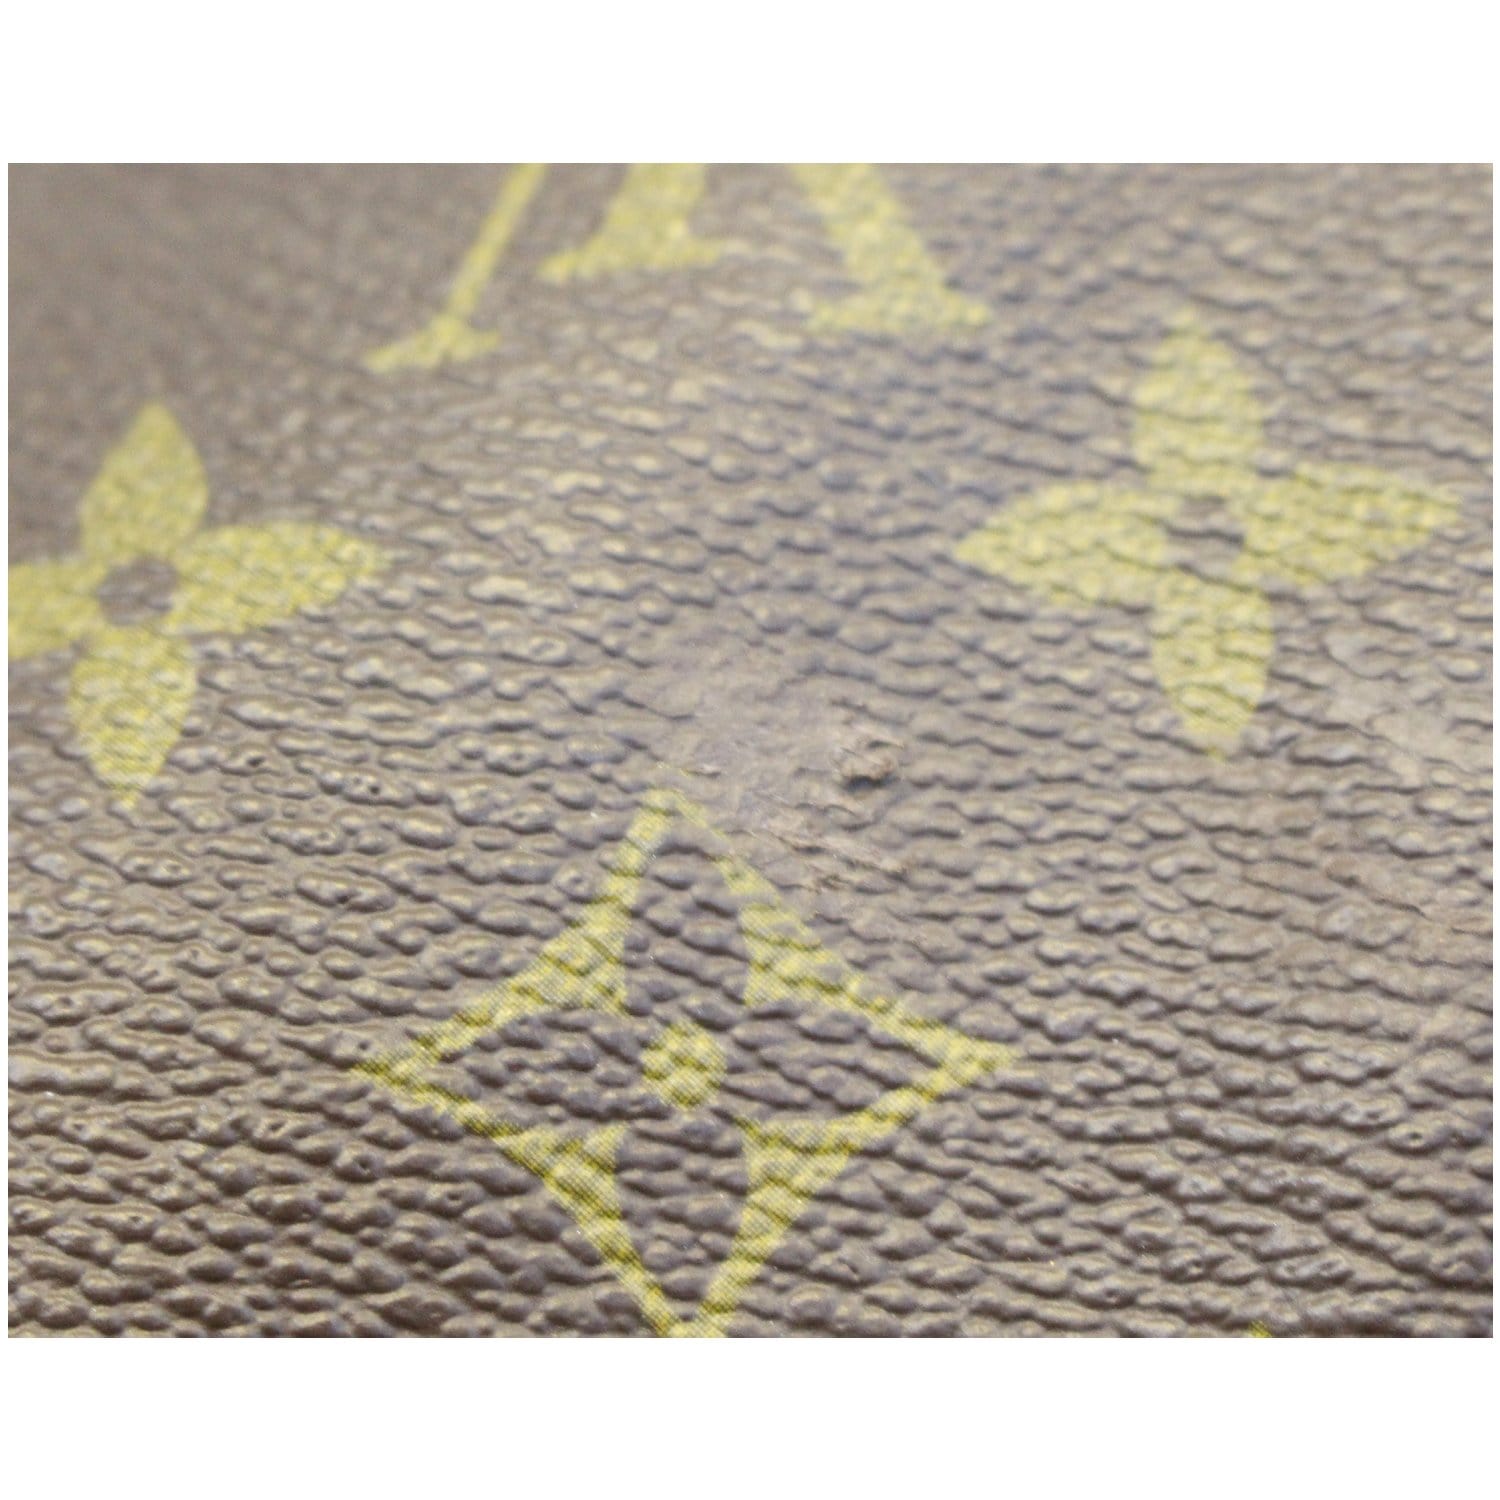 Brown Louis Vuitton Monogram Keepall 55 Travel Bag, Infrastructure-intelligenceShops Revival